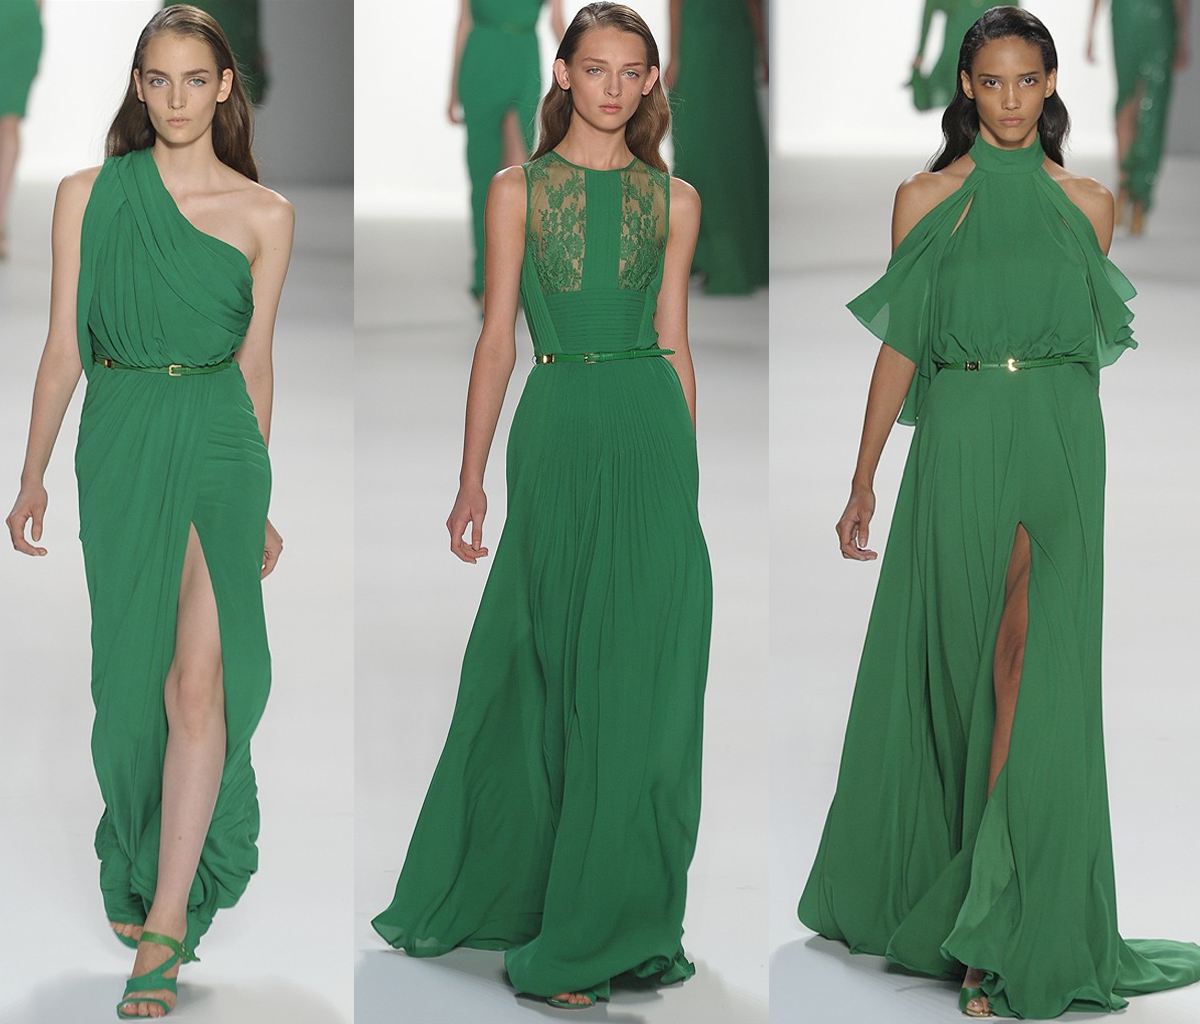 Bridal Showplace Blog: 2013 Wedding Color: Emerald Green